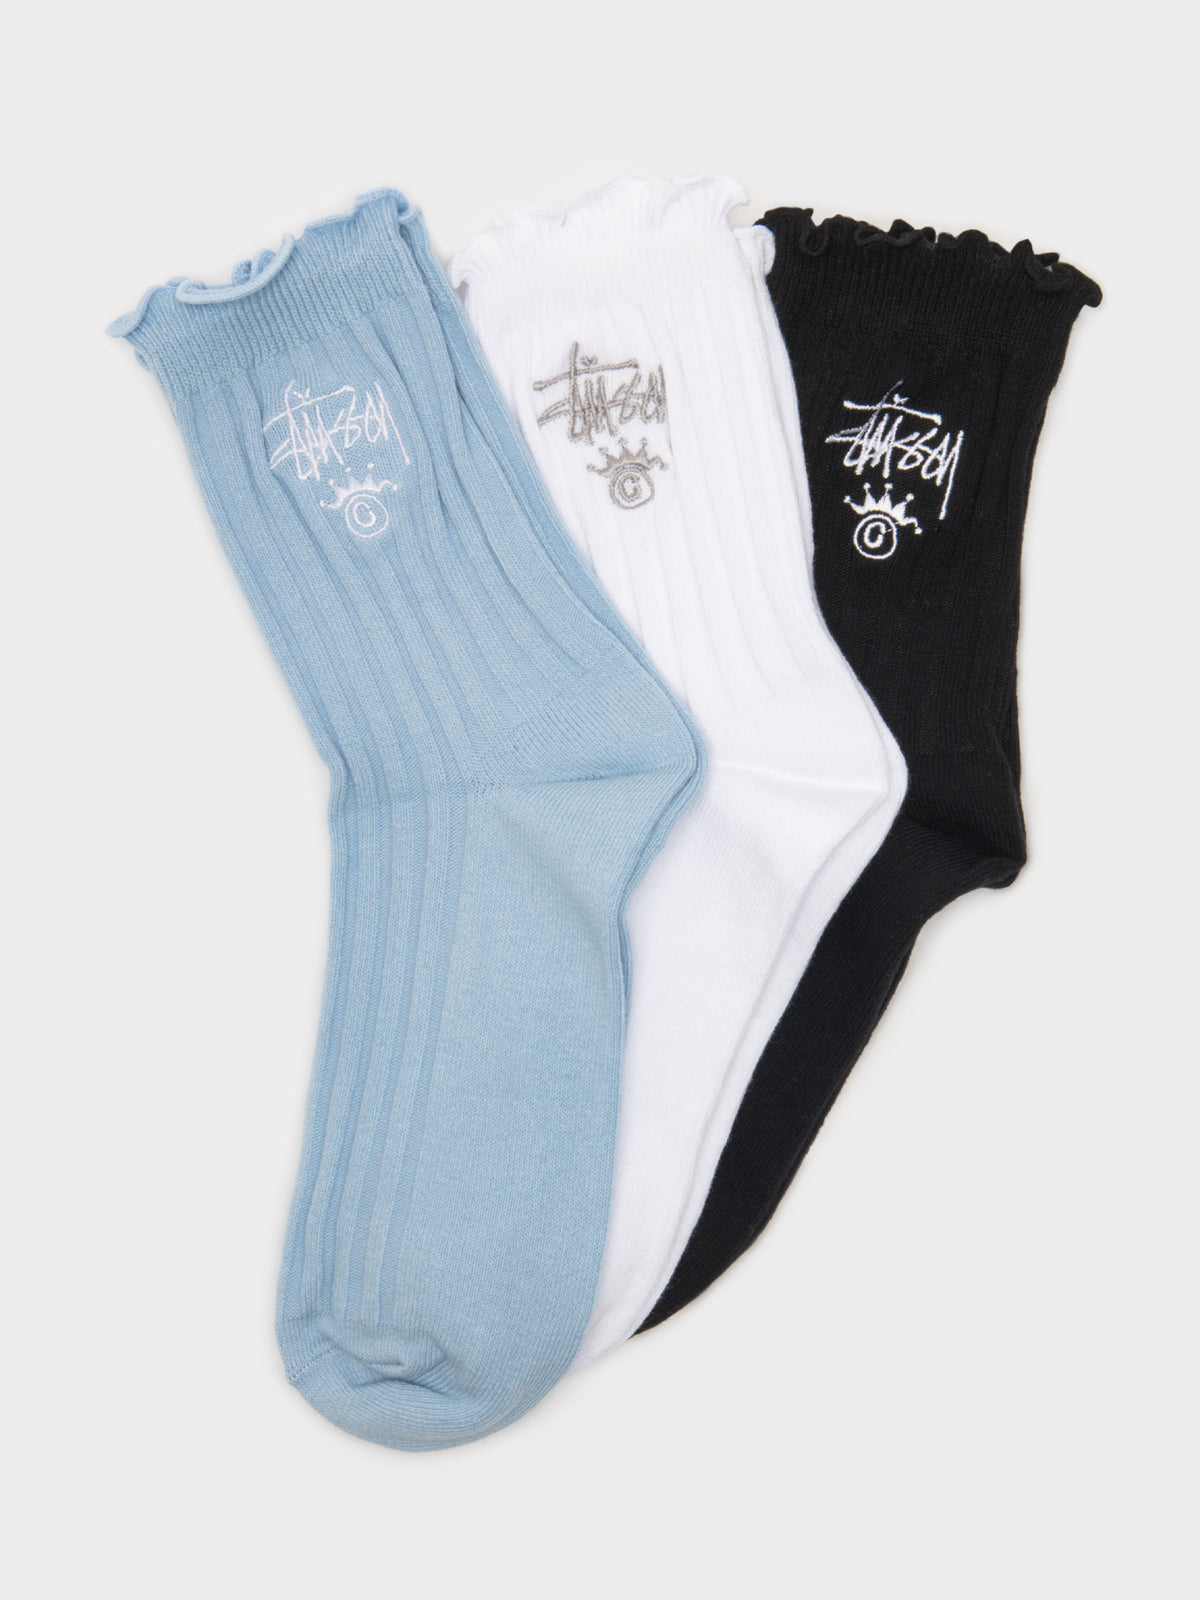 3 Pairs of Stussy Frill Socks in Black, Powder Blue &amp; White